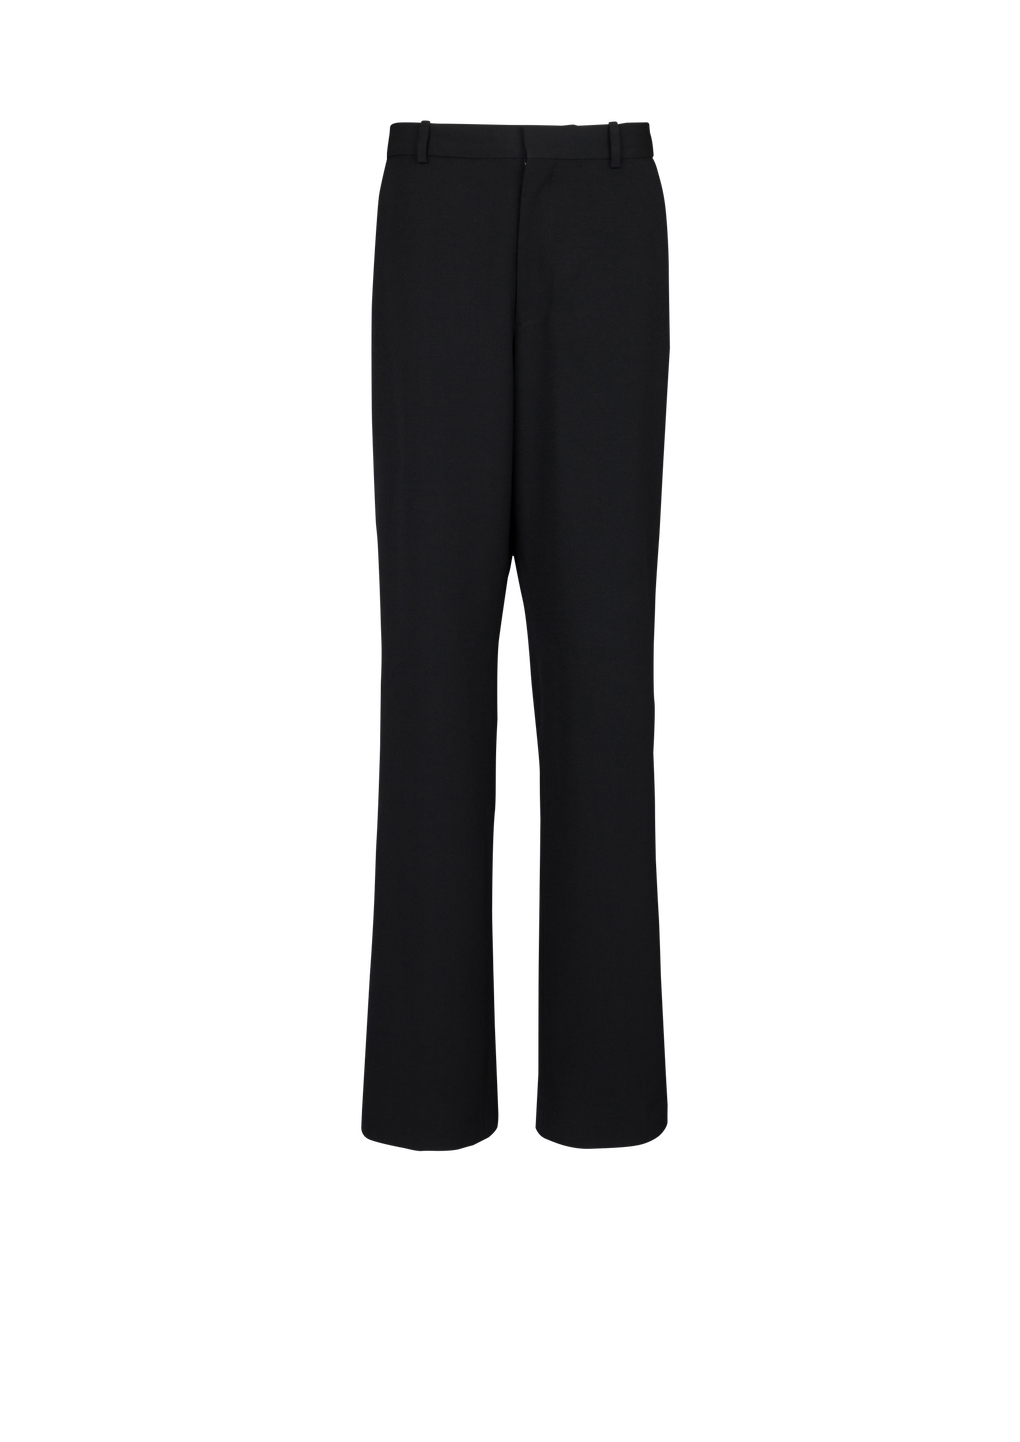 Wool wide-leg trousers, black, hi-res